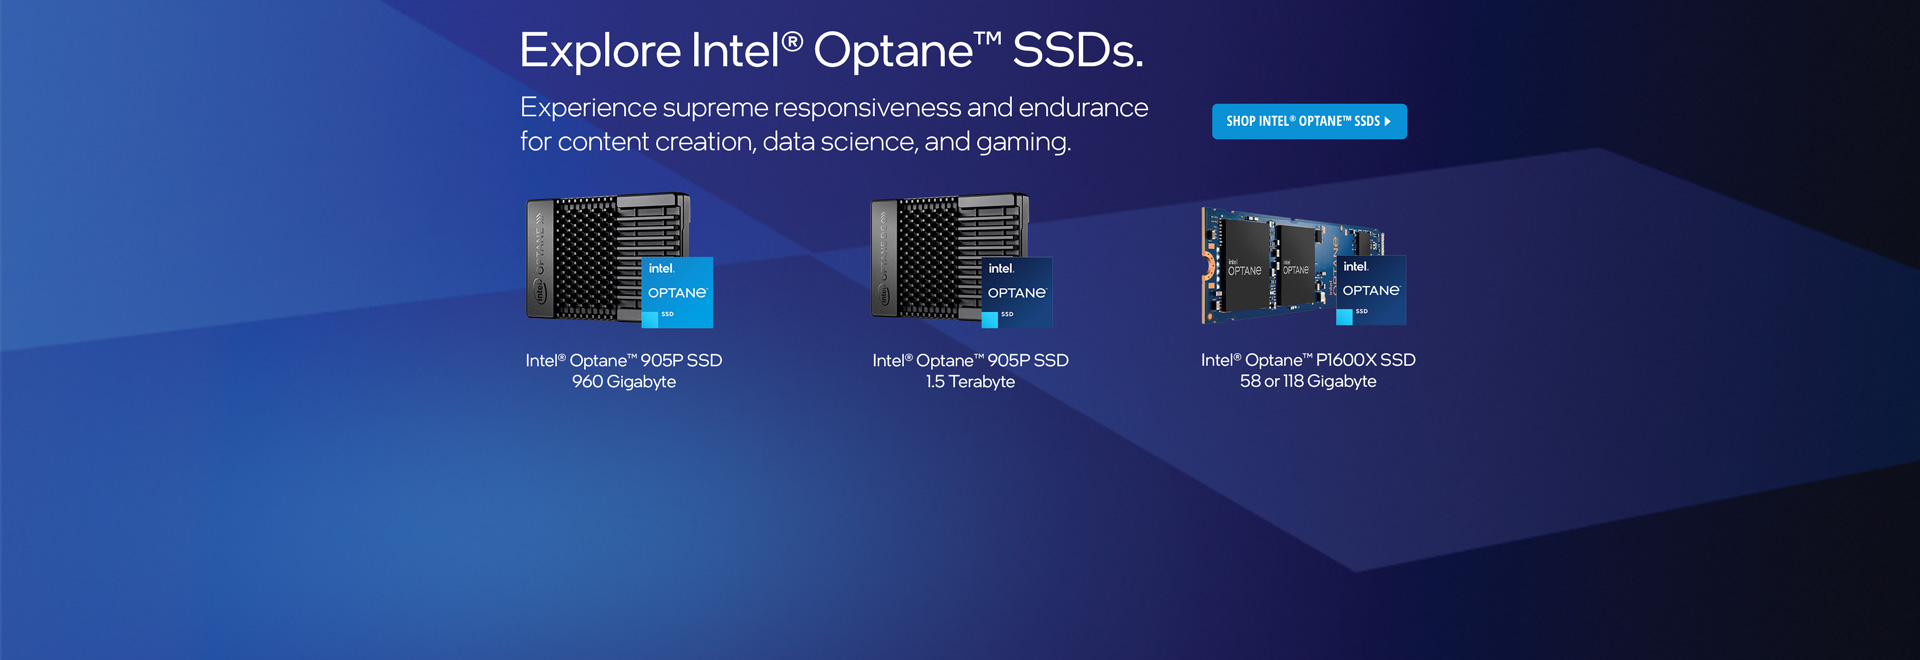 Explore Intel ® Optane™ SSDs